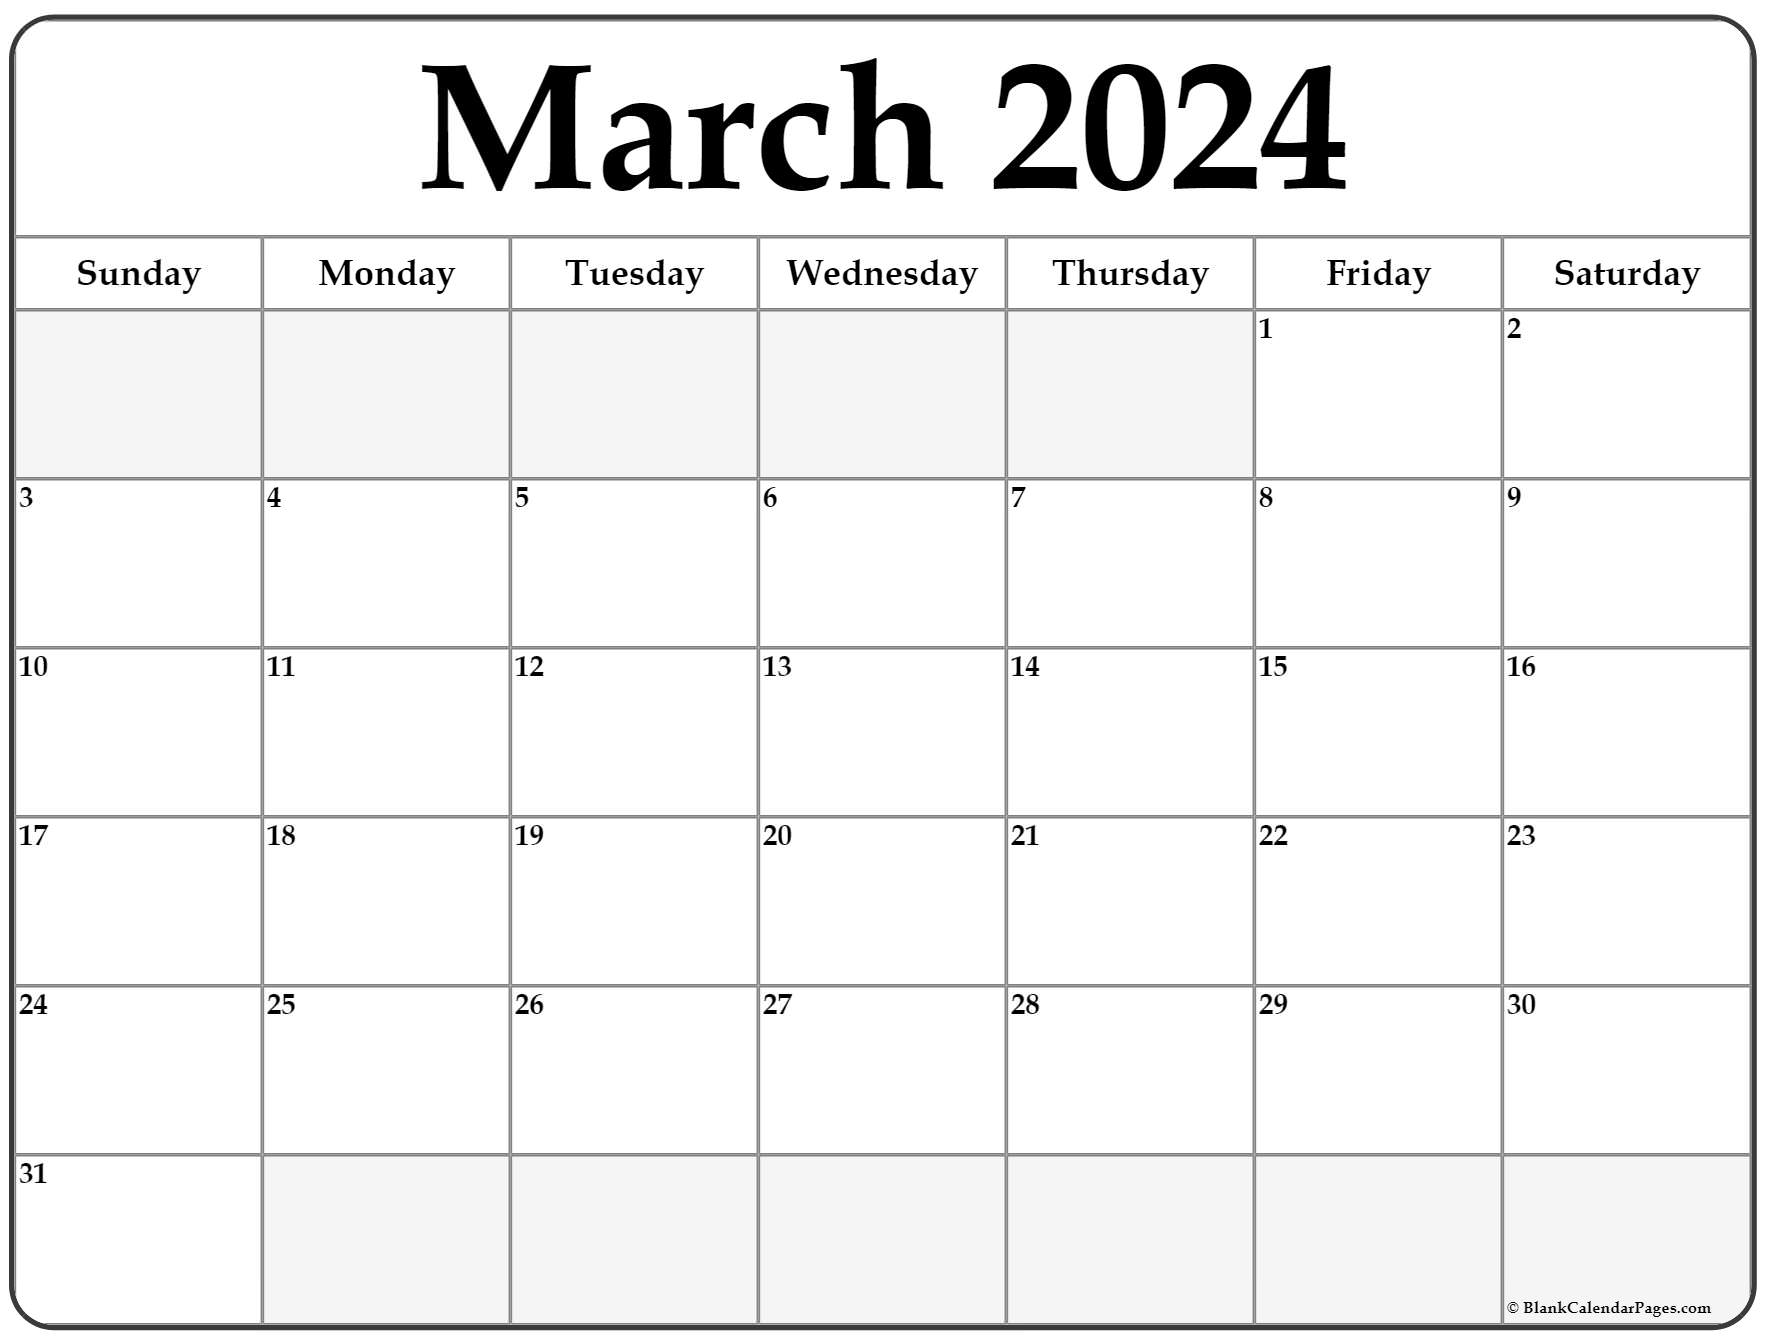 Print Calendar March 2022 March 2022 Calendar | Free Printable Calendar Templates